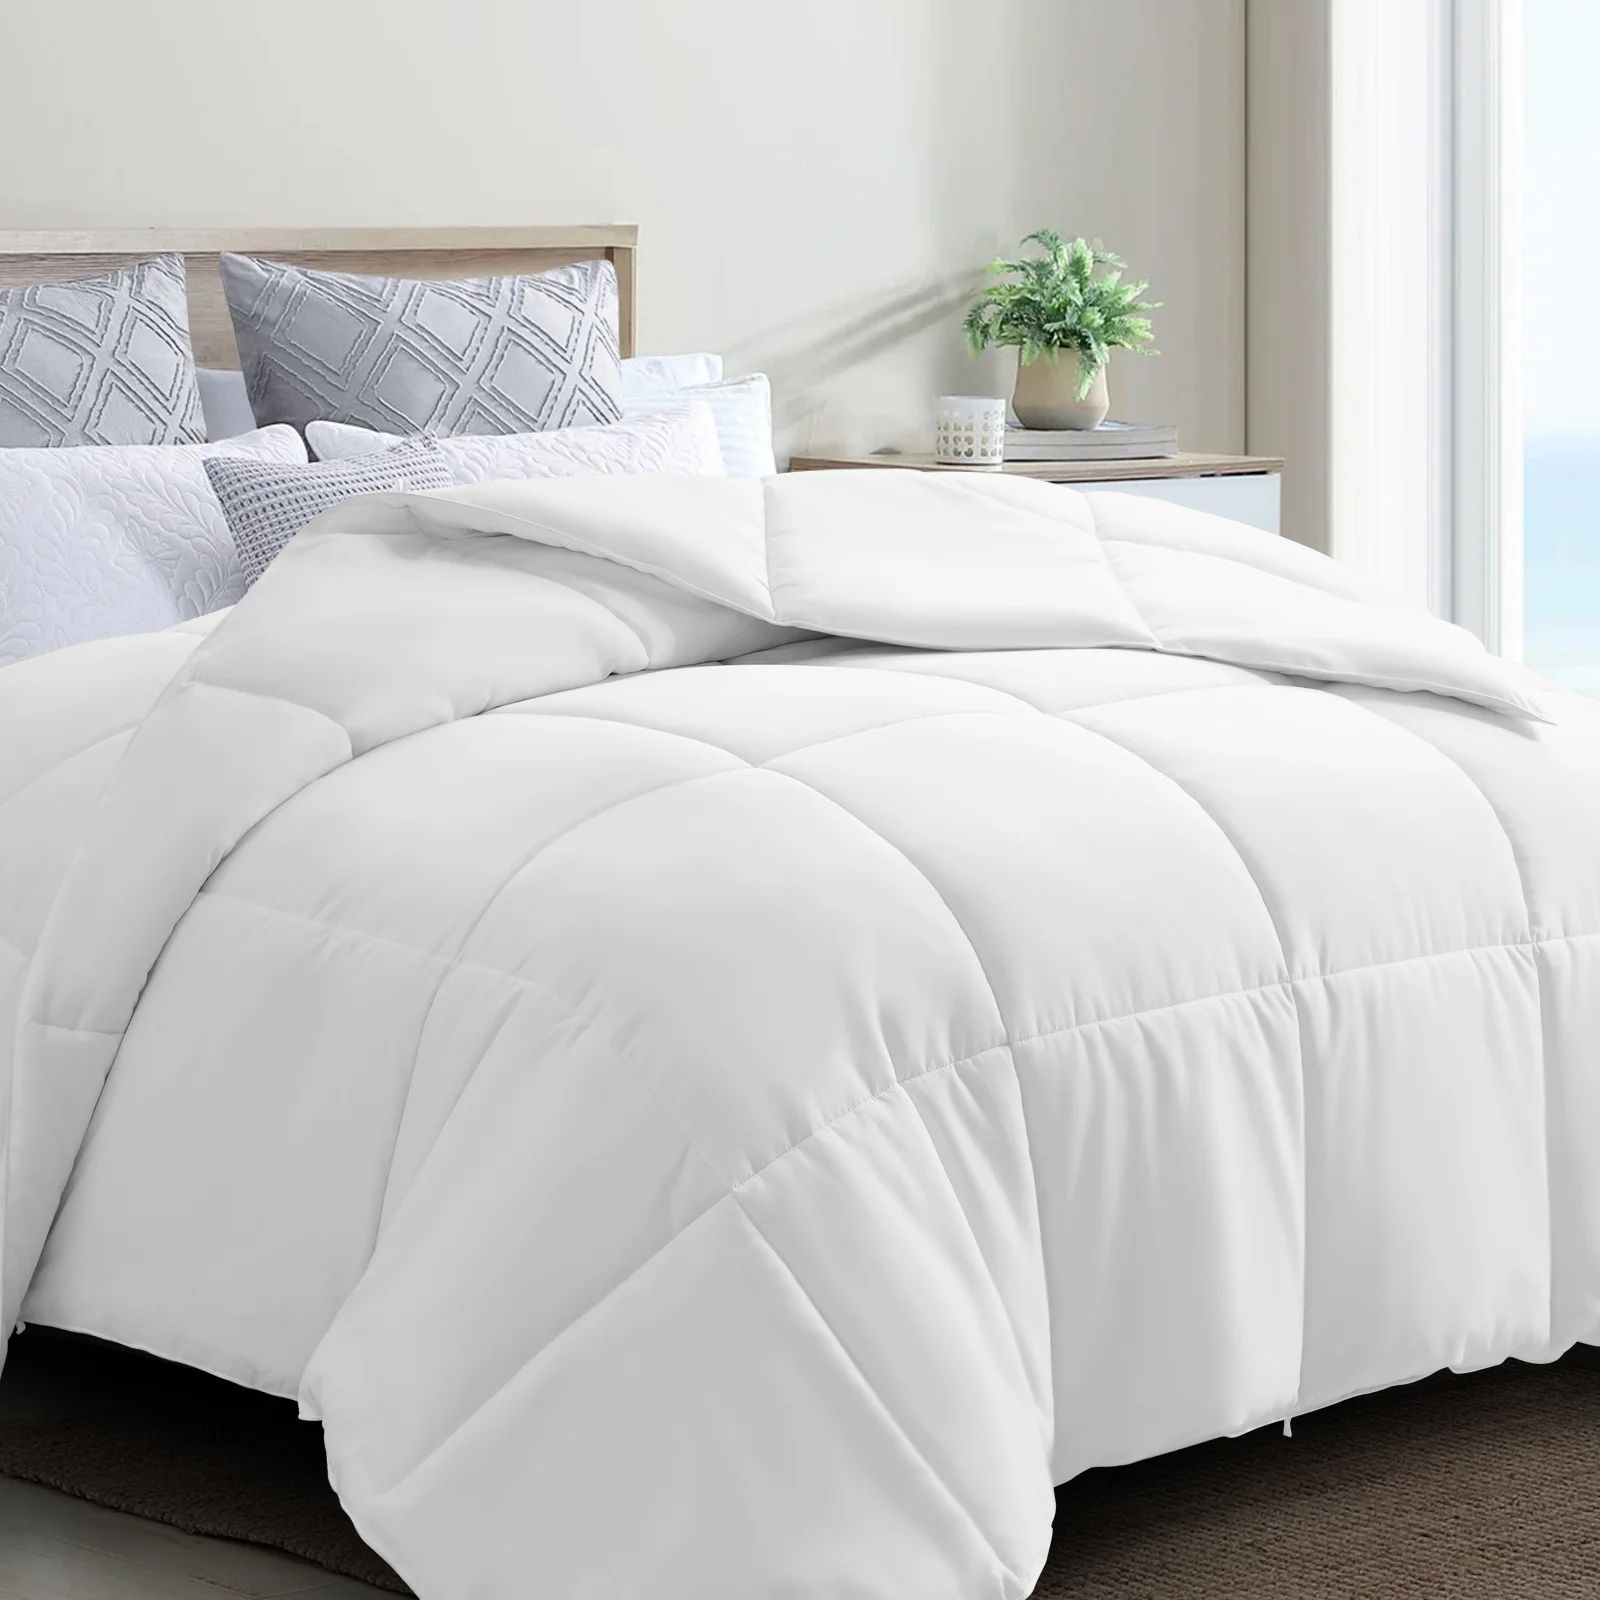 Balichun Queen Comforter Duvet Insert - Quilted White, All Season Down Alternative Queen Size Bed... | Walmart (US)